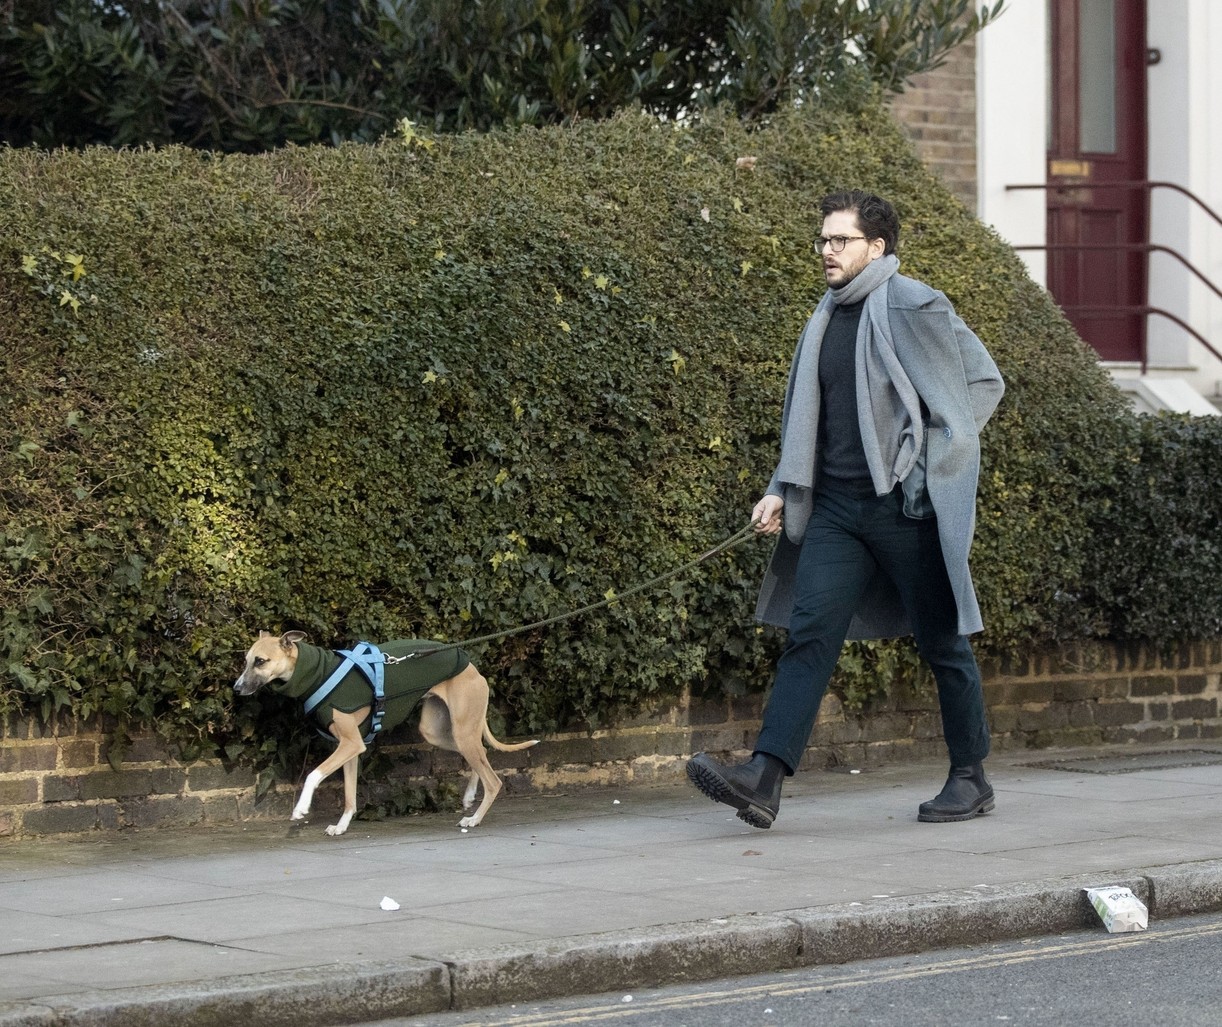 kit harington dog walk after welcoming newborn baby 15